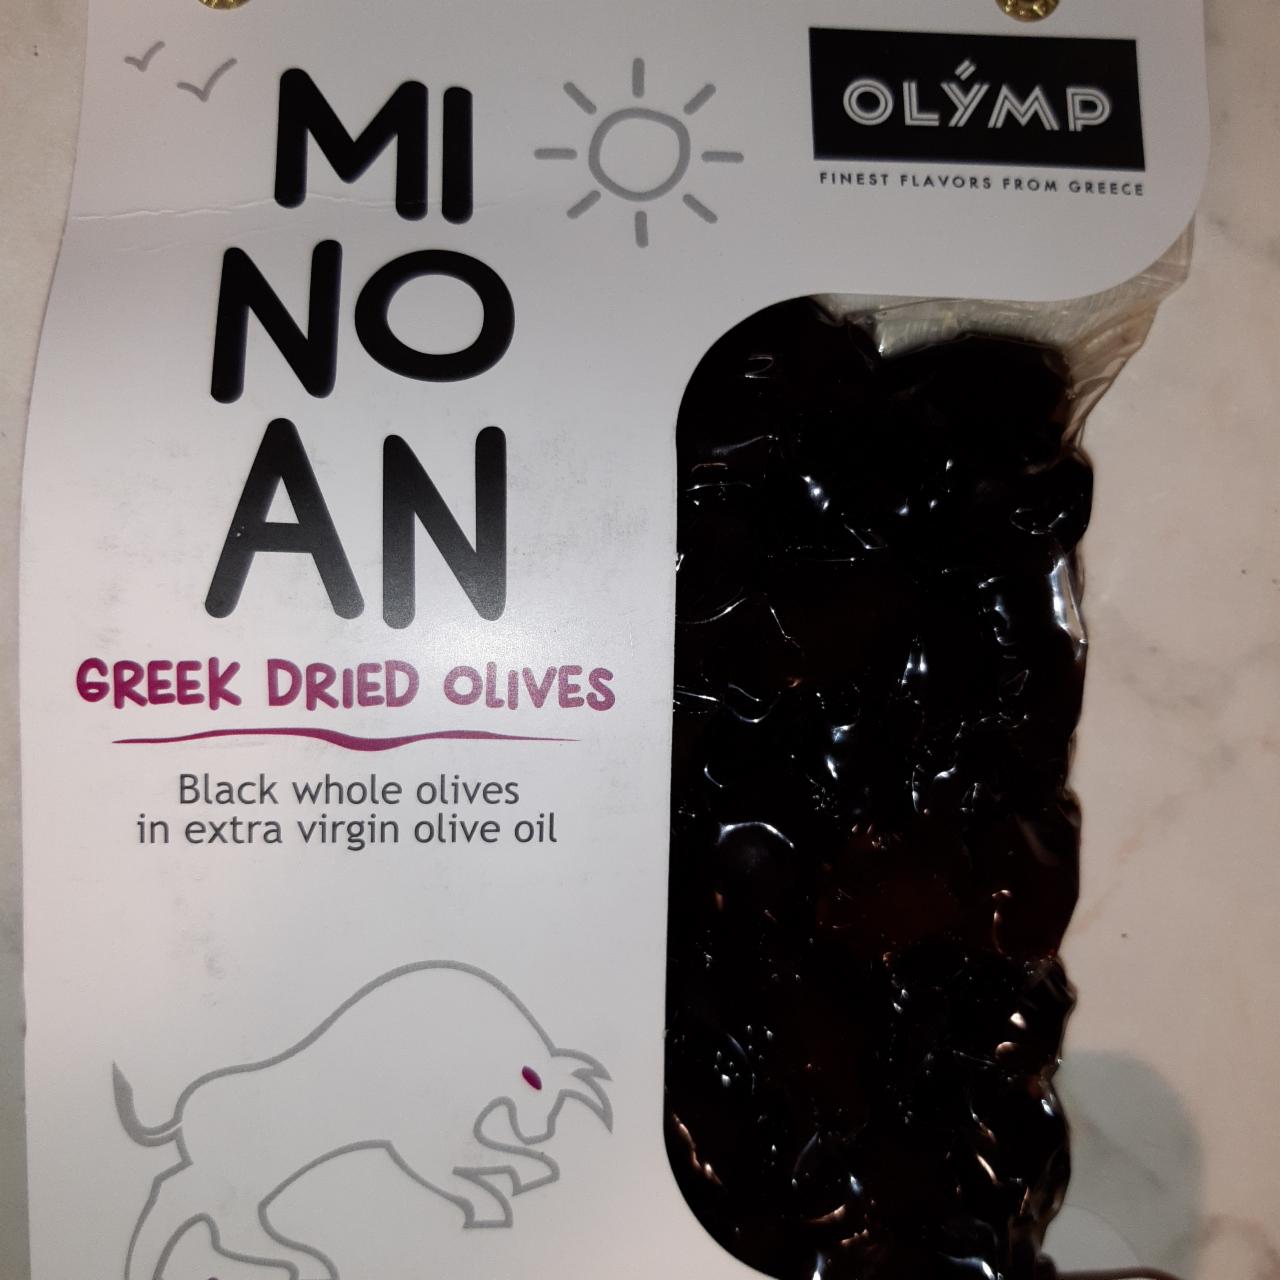 Fotografie - Minoan Greek Dries Olives Olymp